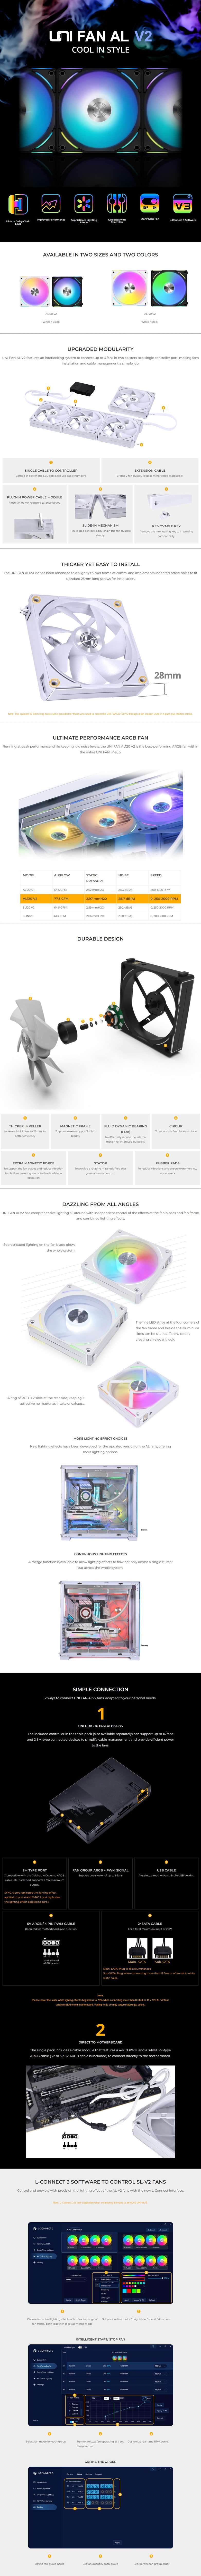 A large marketing image providing additional information about the product Lian Li UNI Fan AL120 V2 Fan White - Single Pack - Additional alt info not provided